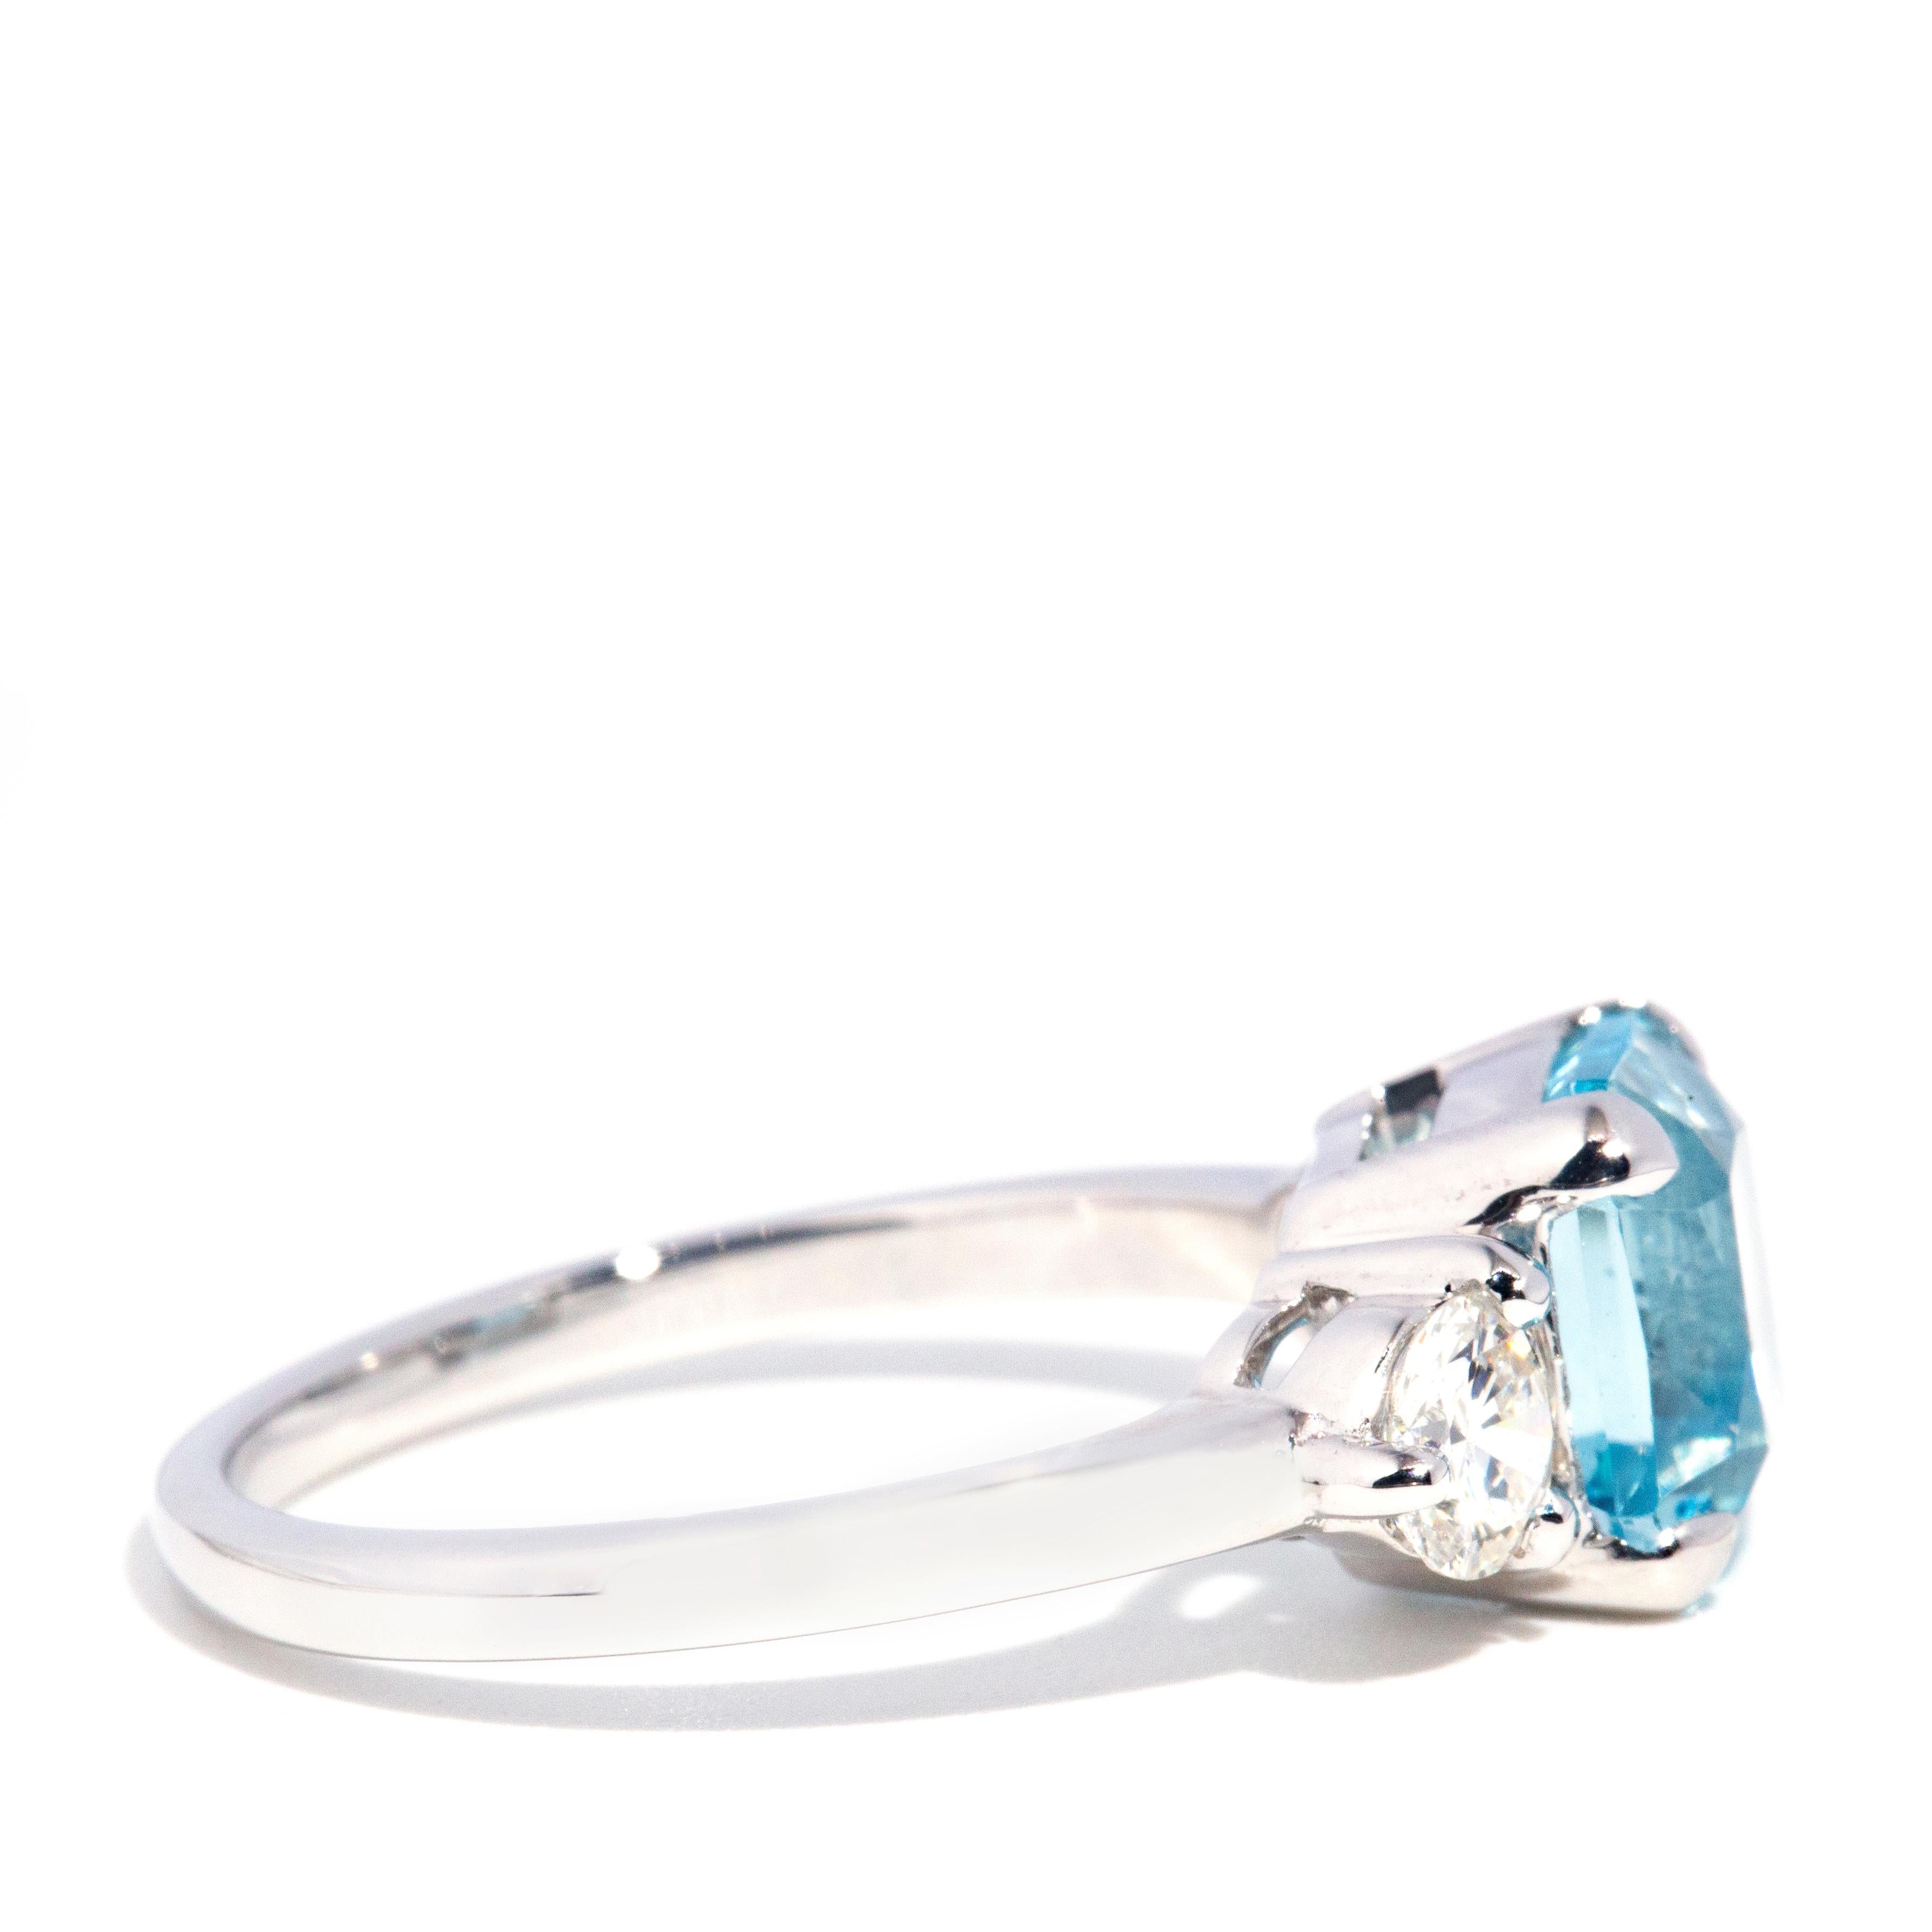 2.49 Carat Blue Aquamarine and 0.58 Carat Certified Diamond Contemporary Ring 2